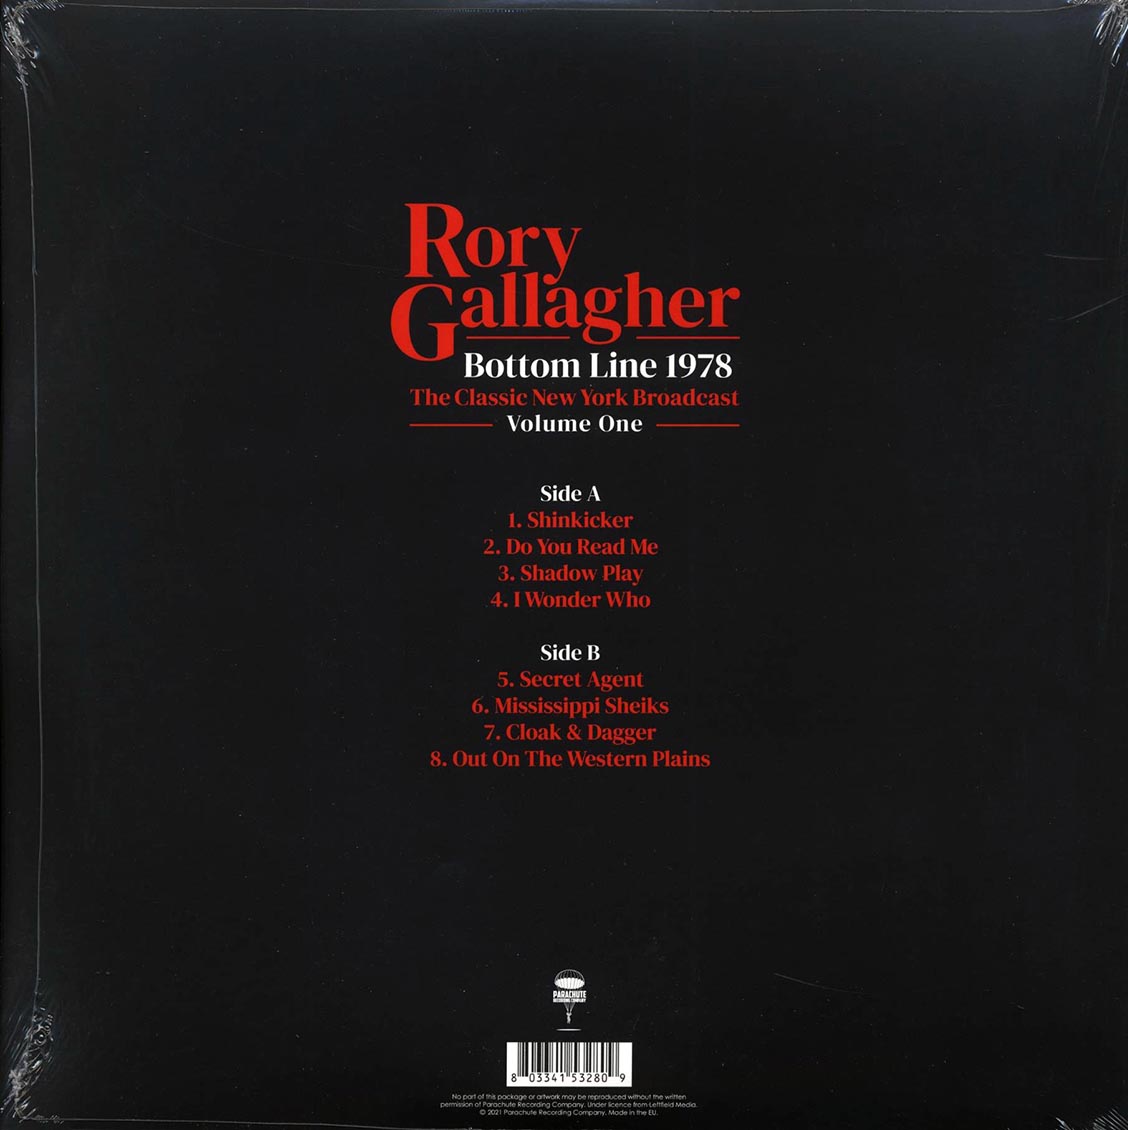 Rory Gallagher - Bottom Line 1978 Volume 1: The Classic New York Broadcast - Vinyl LP, LP